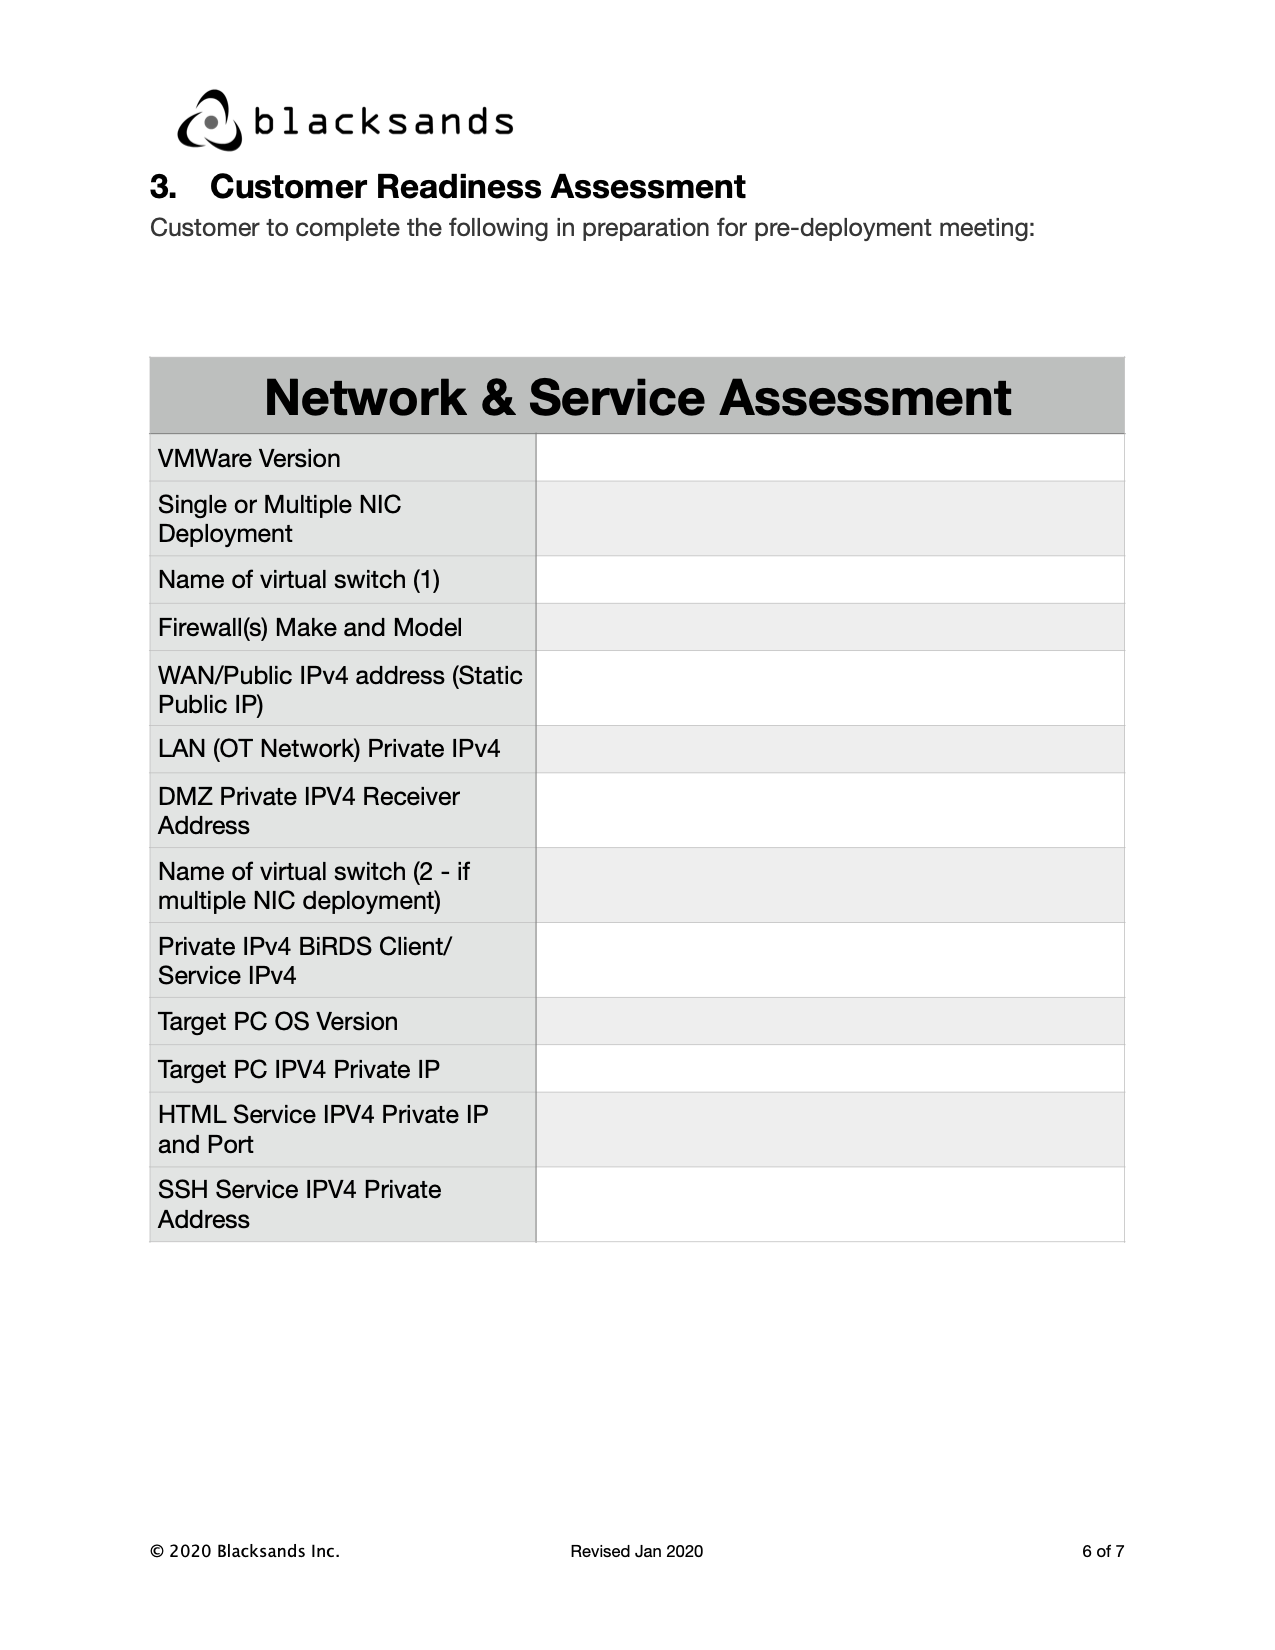 Blacksands_Customer_Readiness_Assessment_v1-6__dragged_.tiff